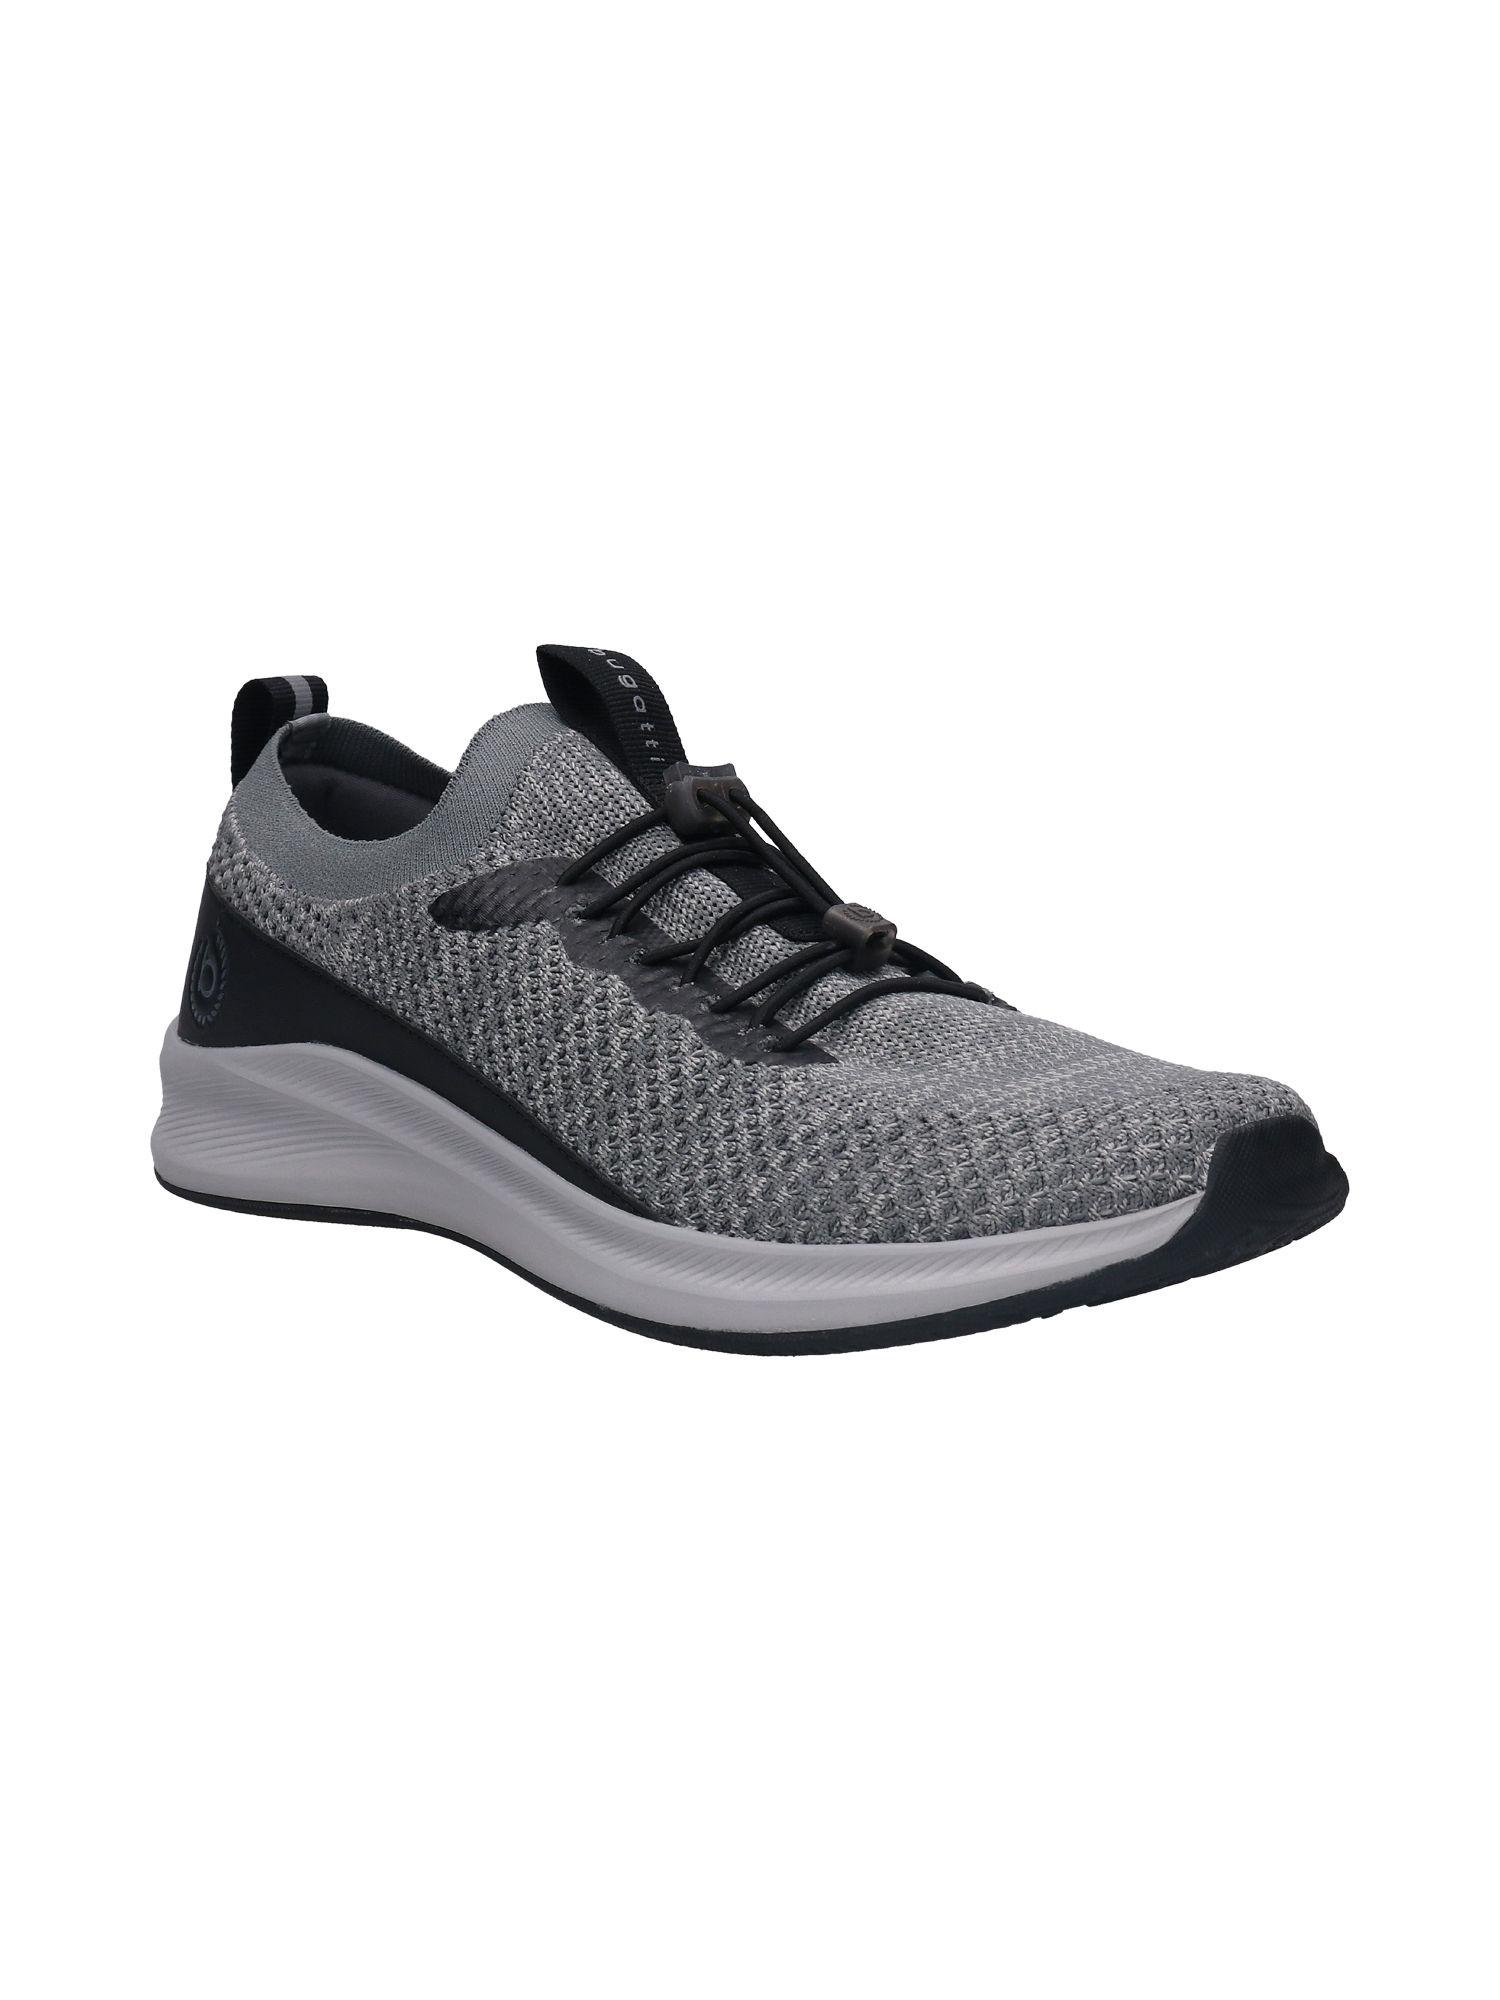 takka-dark-grey-&-light-grey-knitted-sports-running-shoes